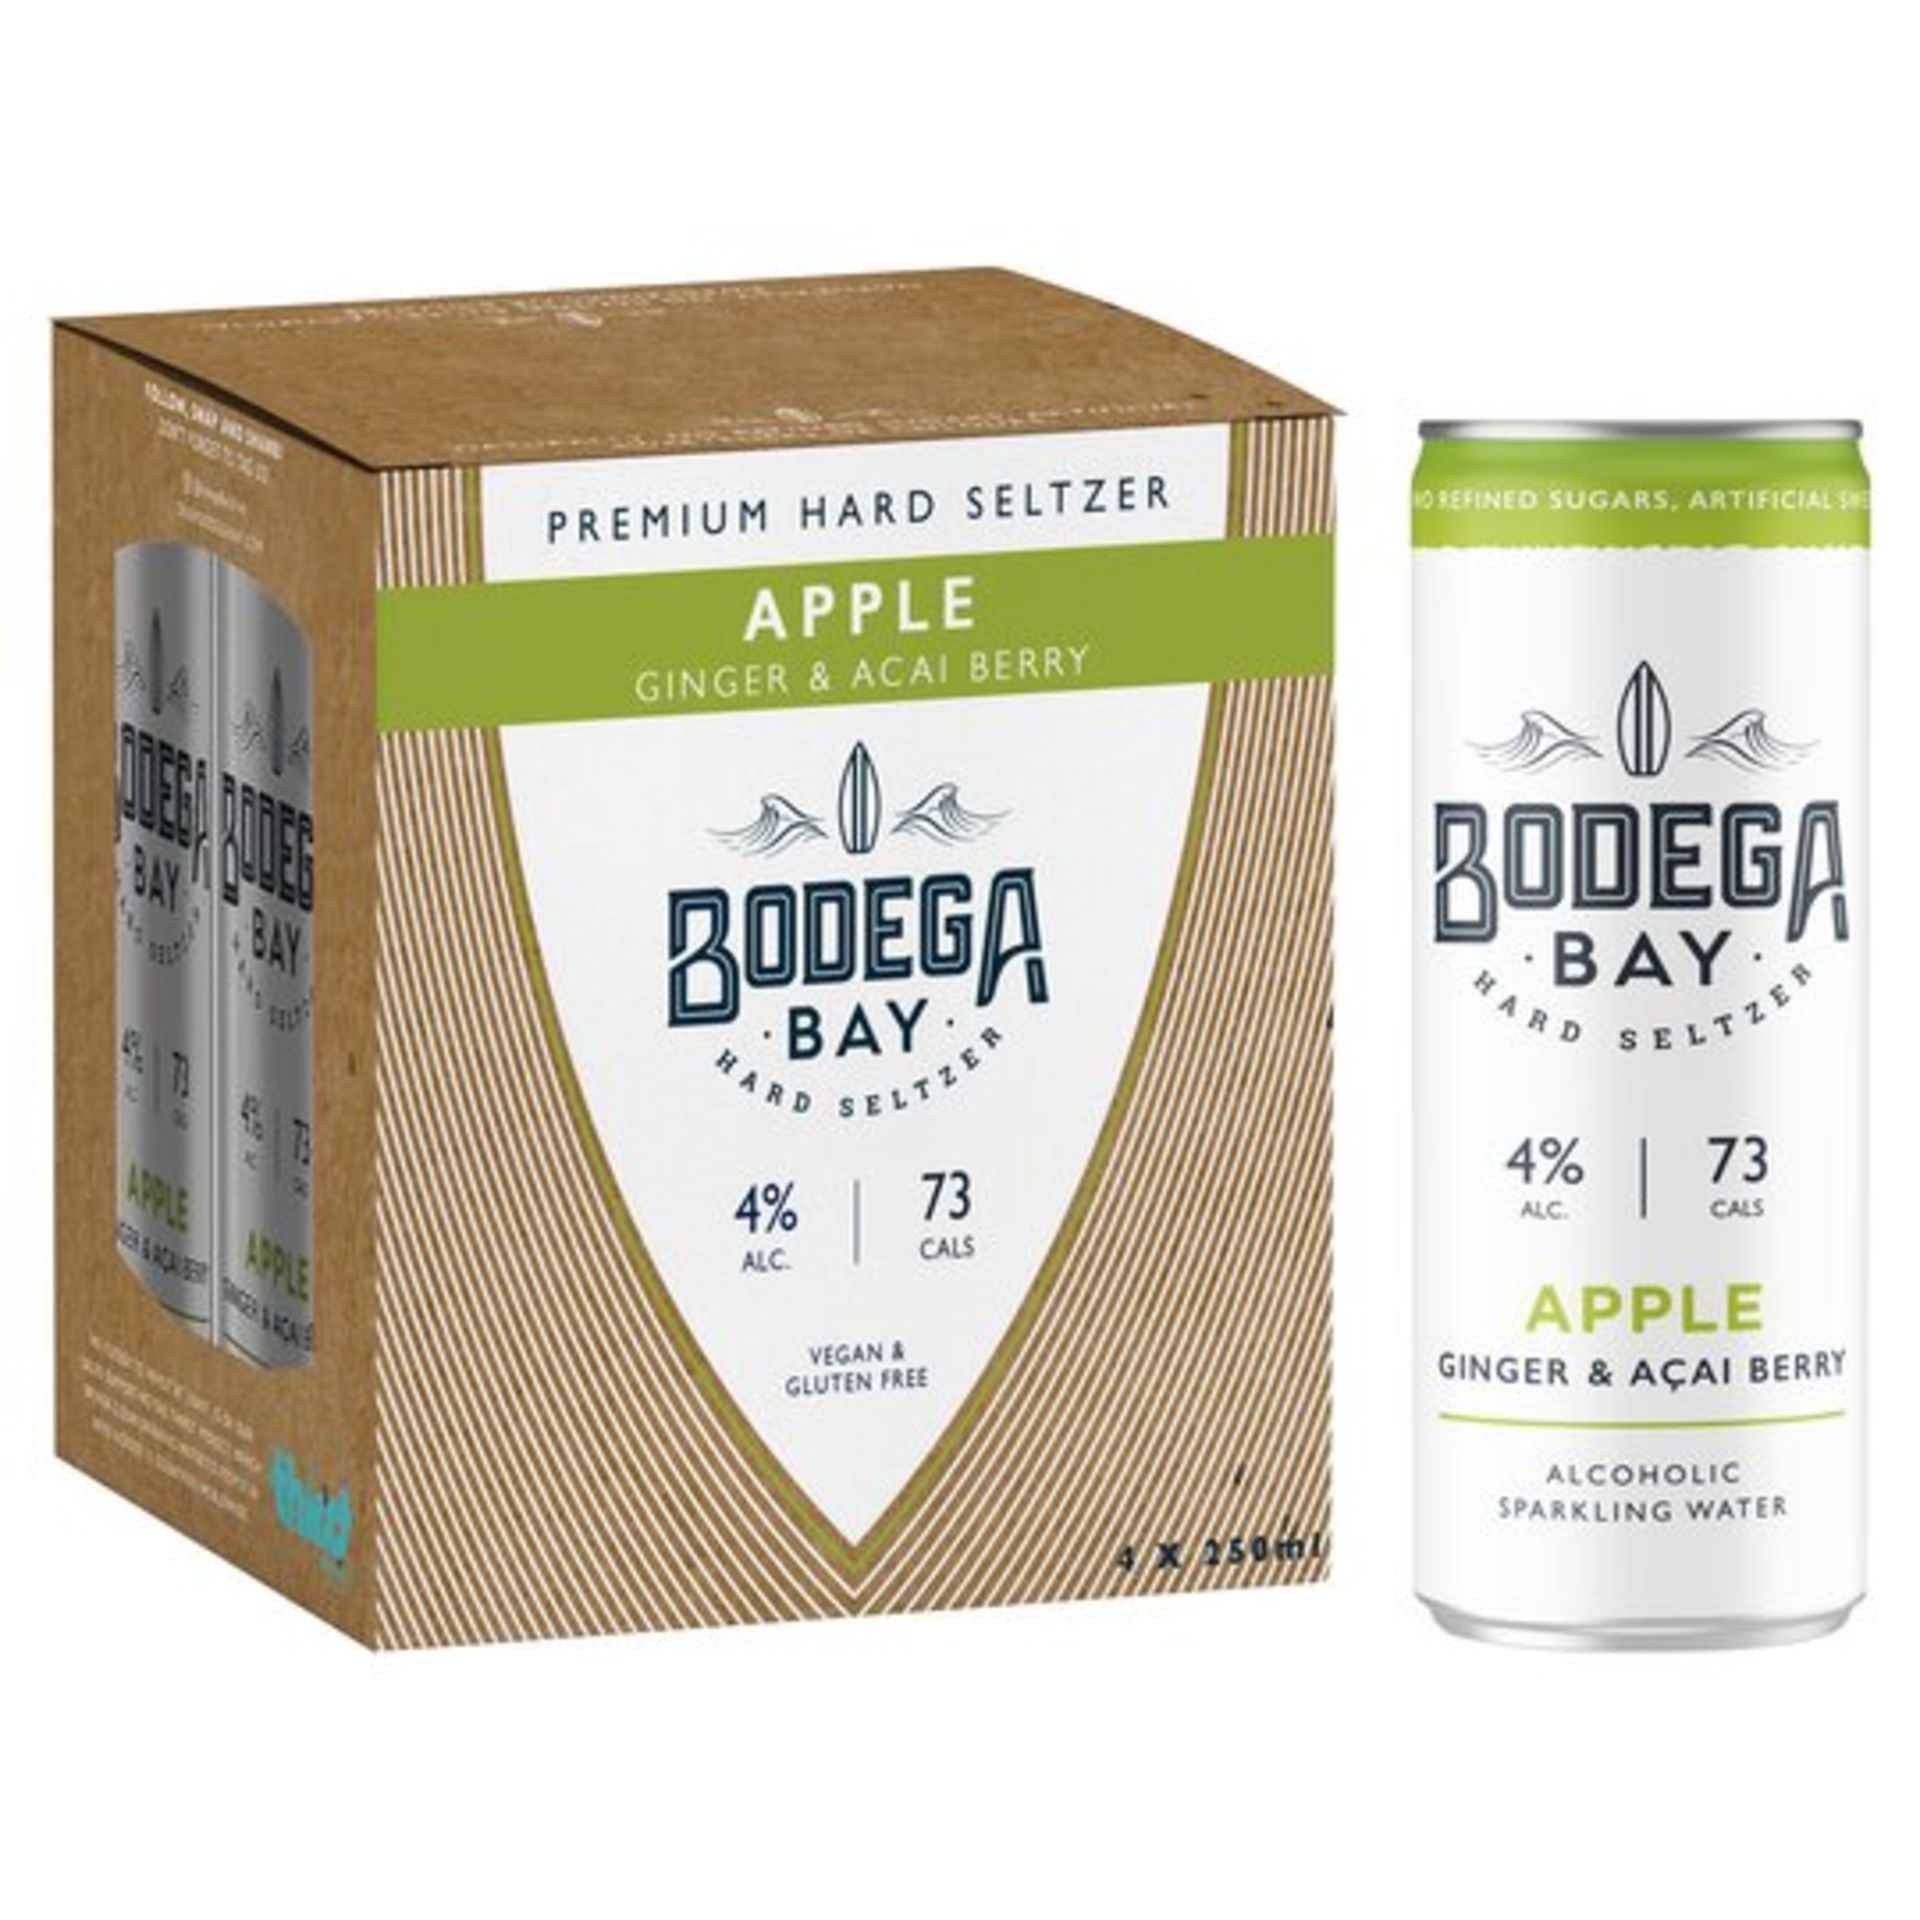 24 x Bodega Bay Hard Seltzer 250ml Alcoholic Sparkling Water Drinks - Apple Ginger & Acai Berry - 4% - Image 6 of 9